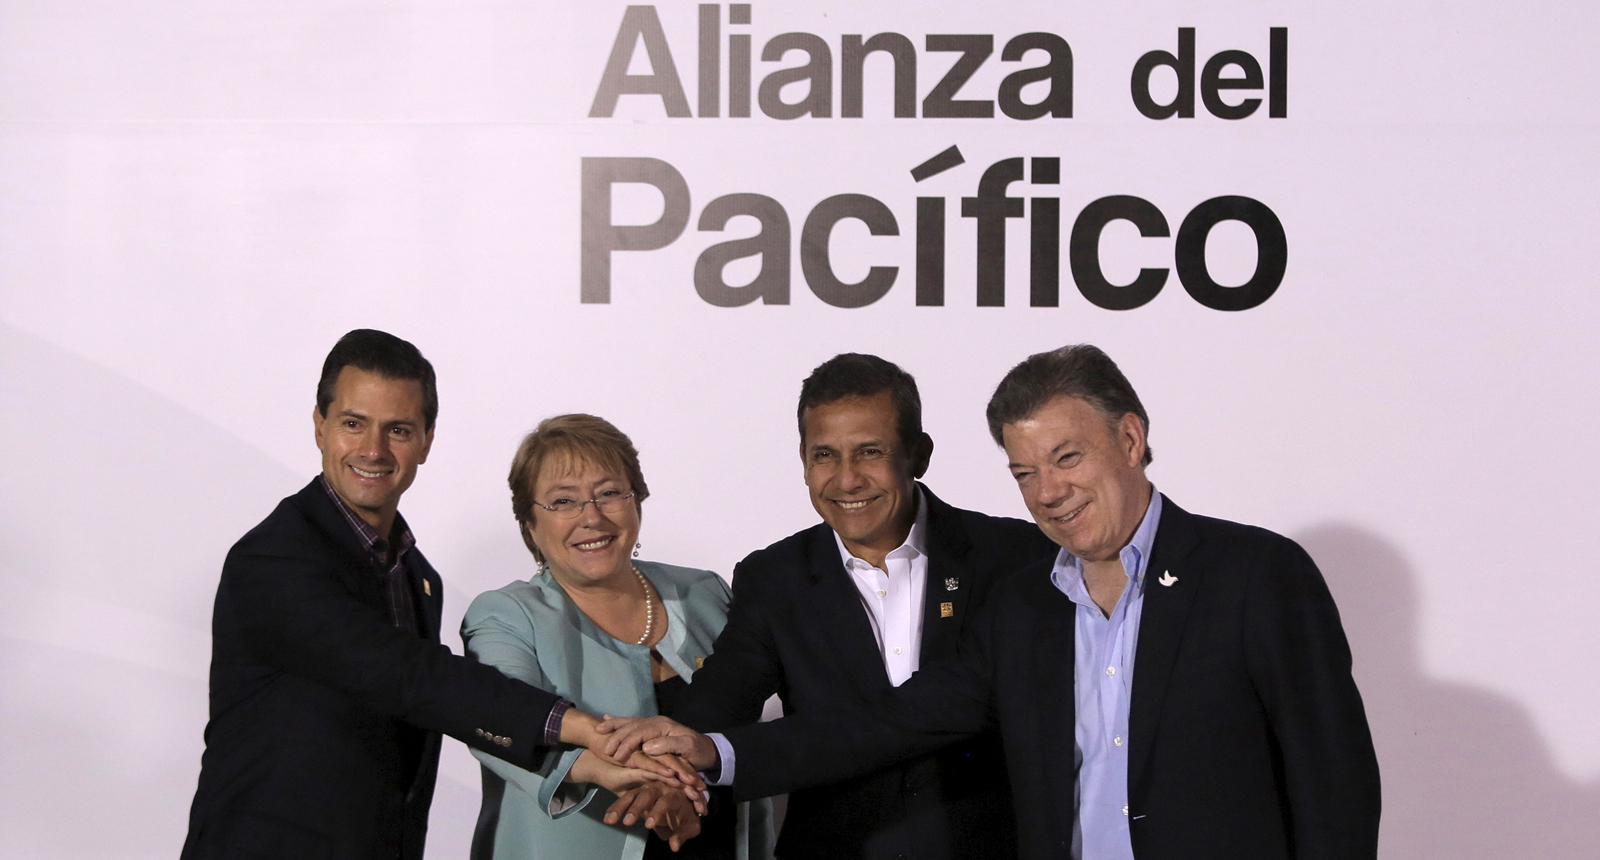 The Pacific Alliance: Nation-Branding through Regional Organisations